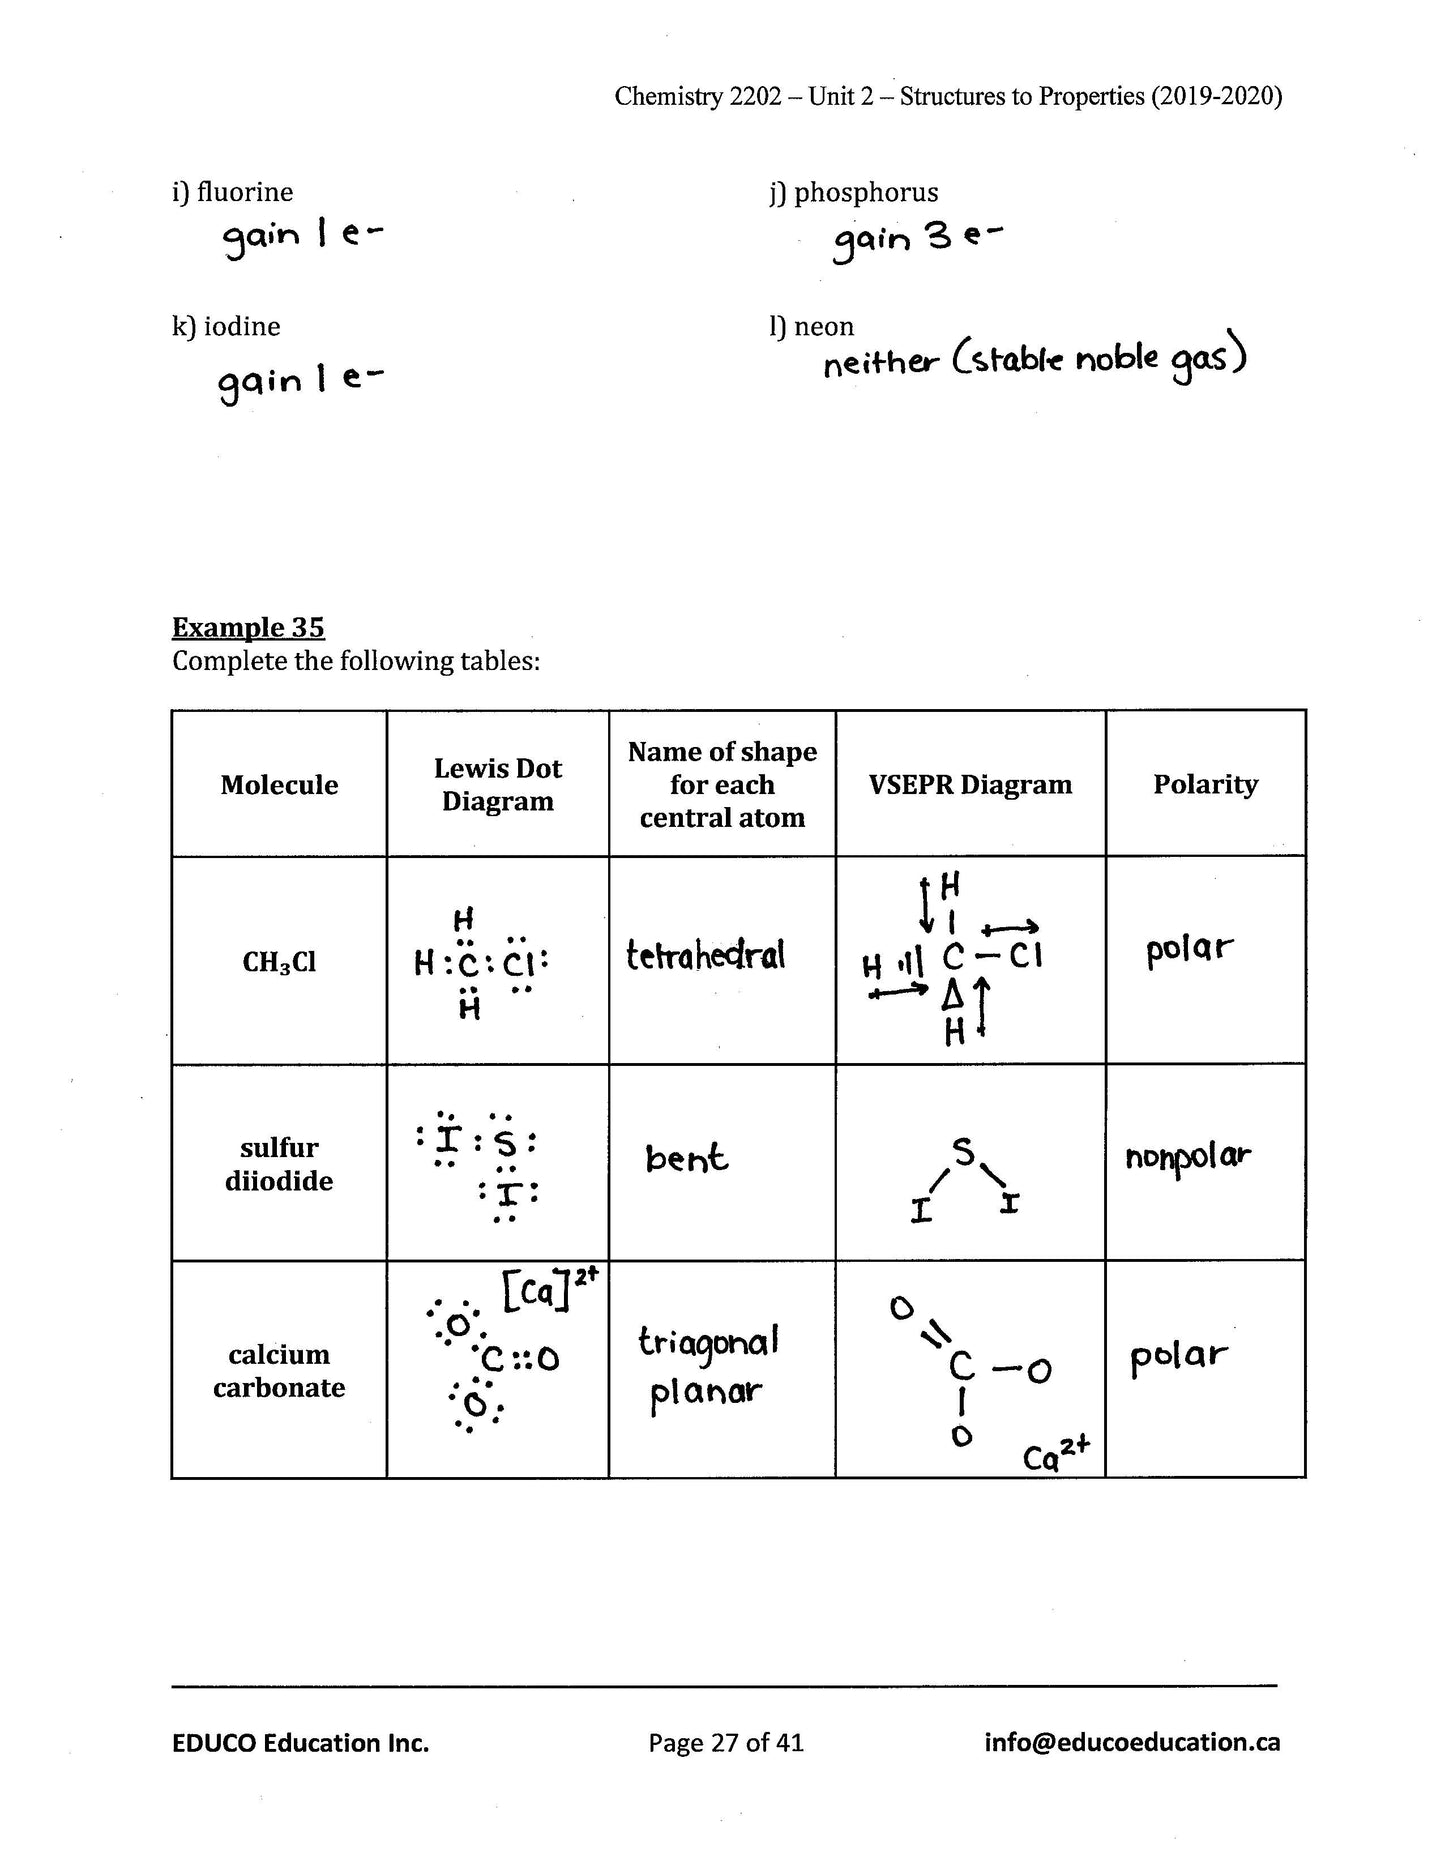 Chemistry 2202 (Physical Workbook)